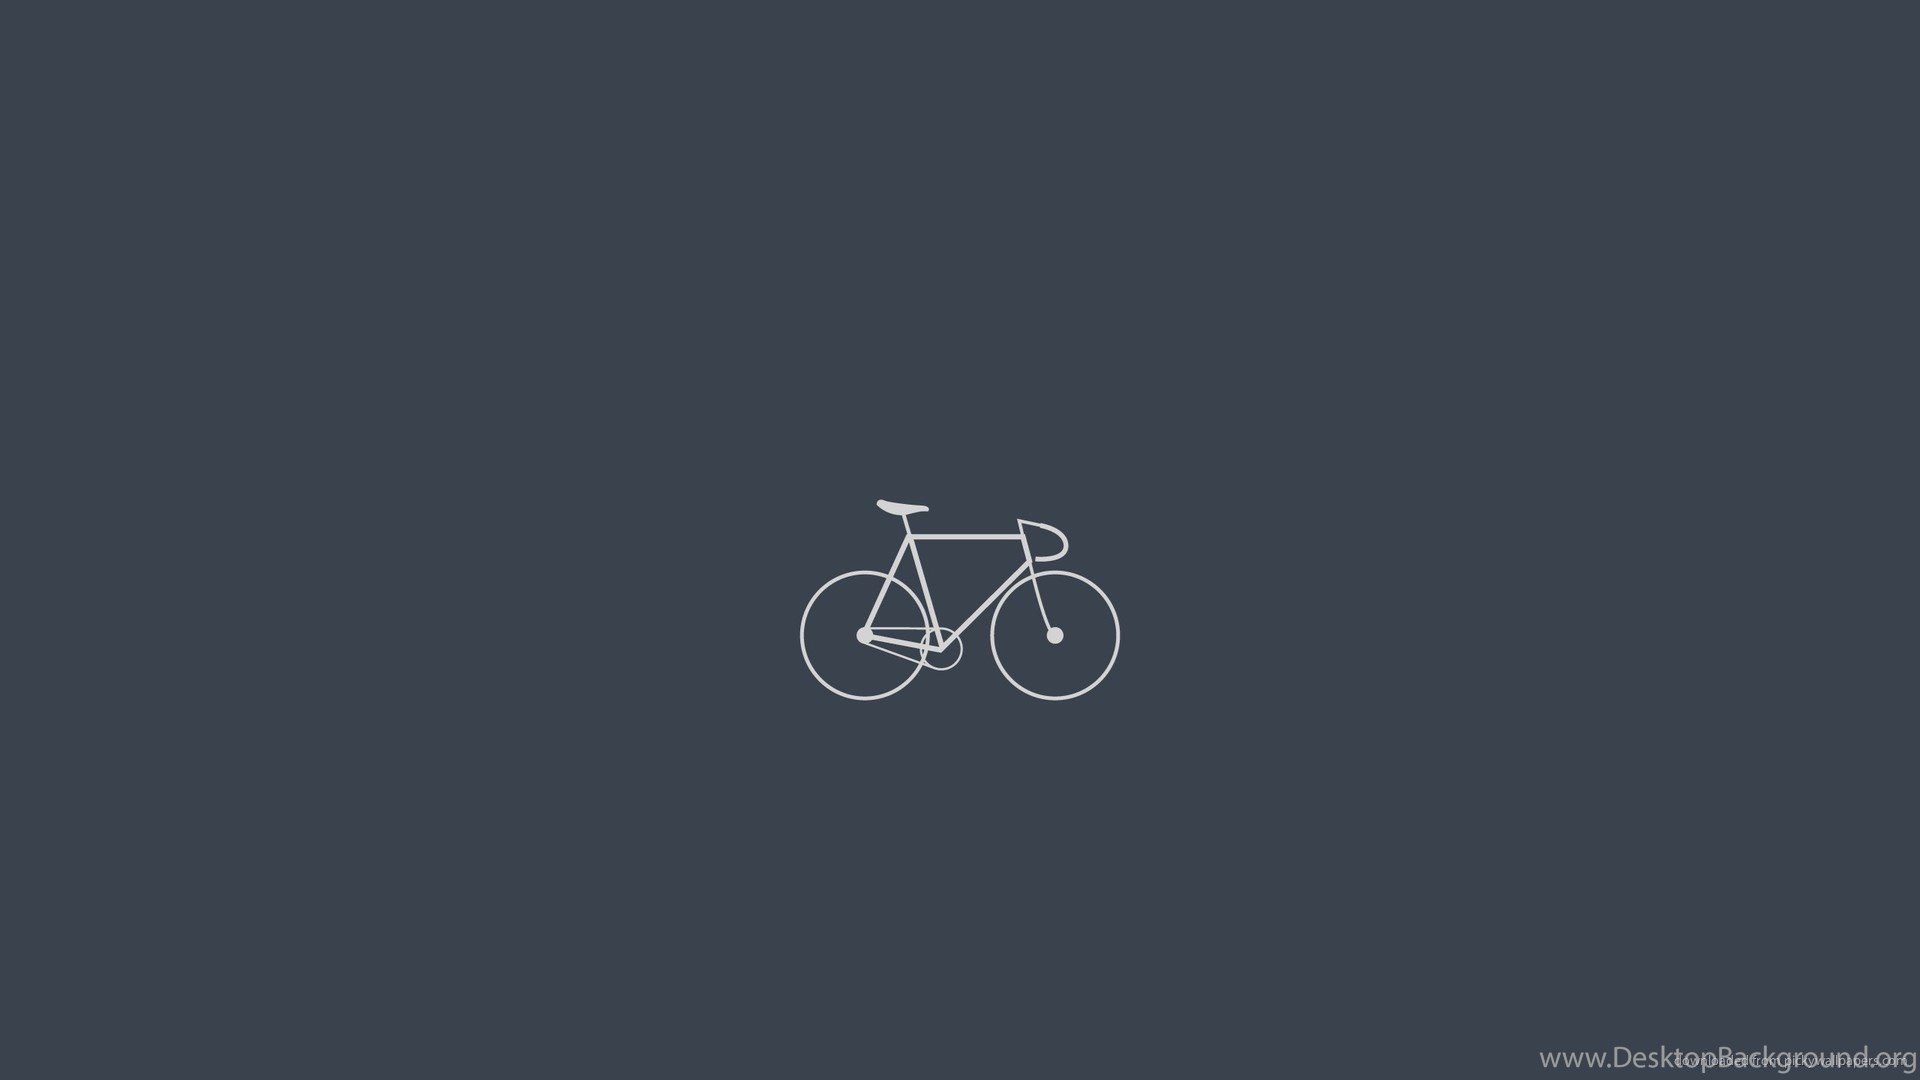 Download 1920x1080 Minimalistci Fixed Gear Bike Wallpaper Desktop Background